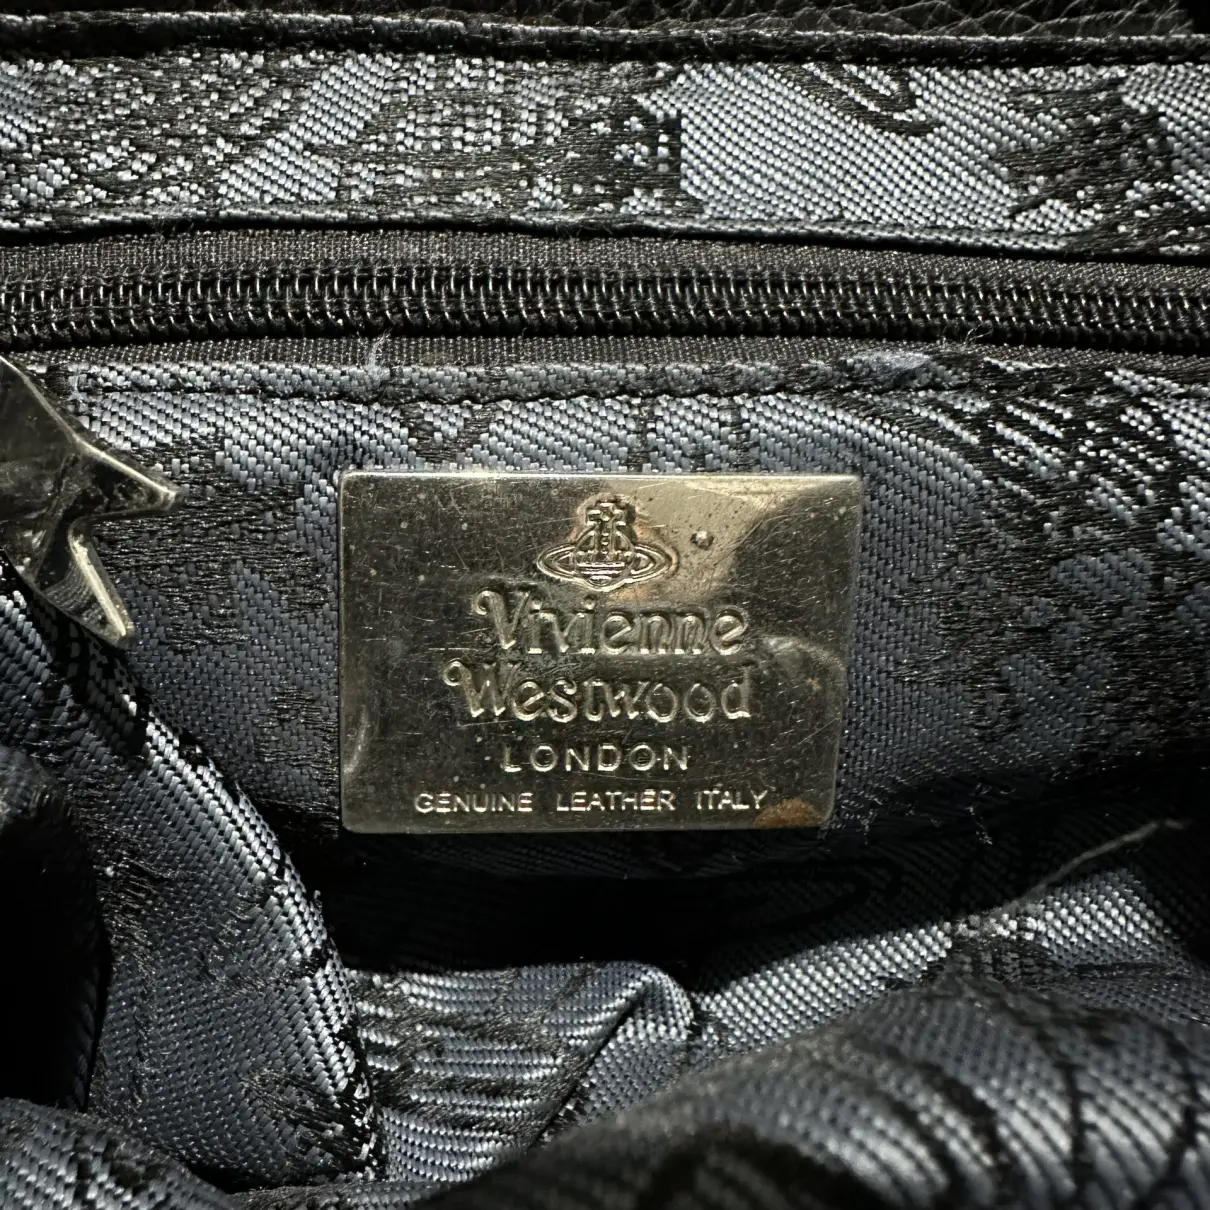 Leather backpack Vivienne Westwood